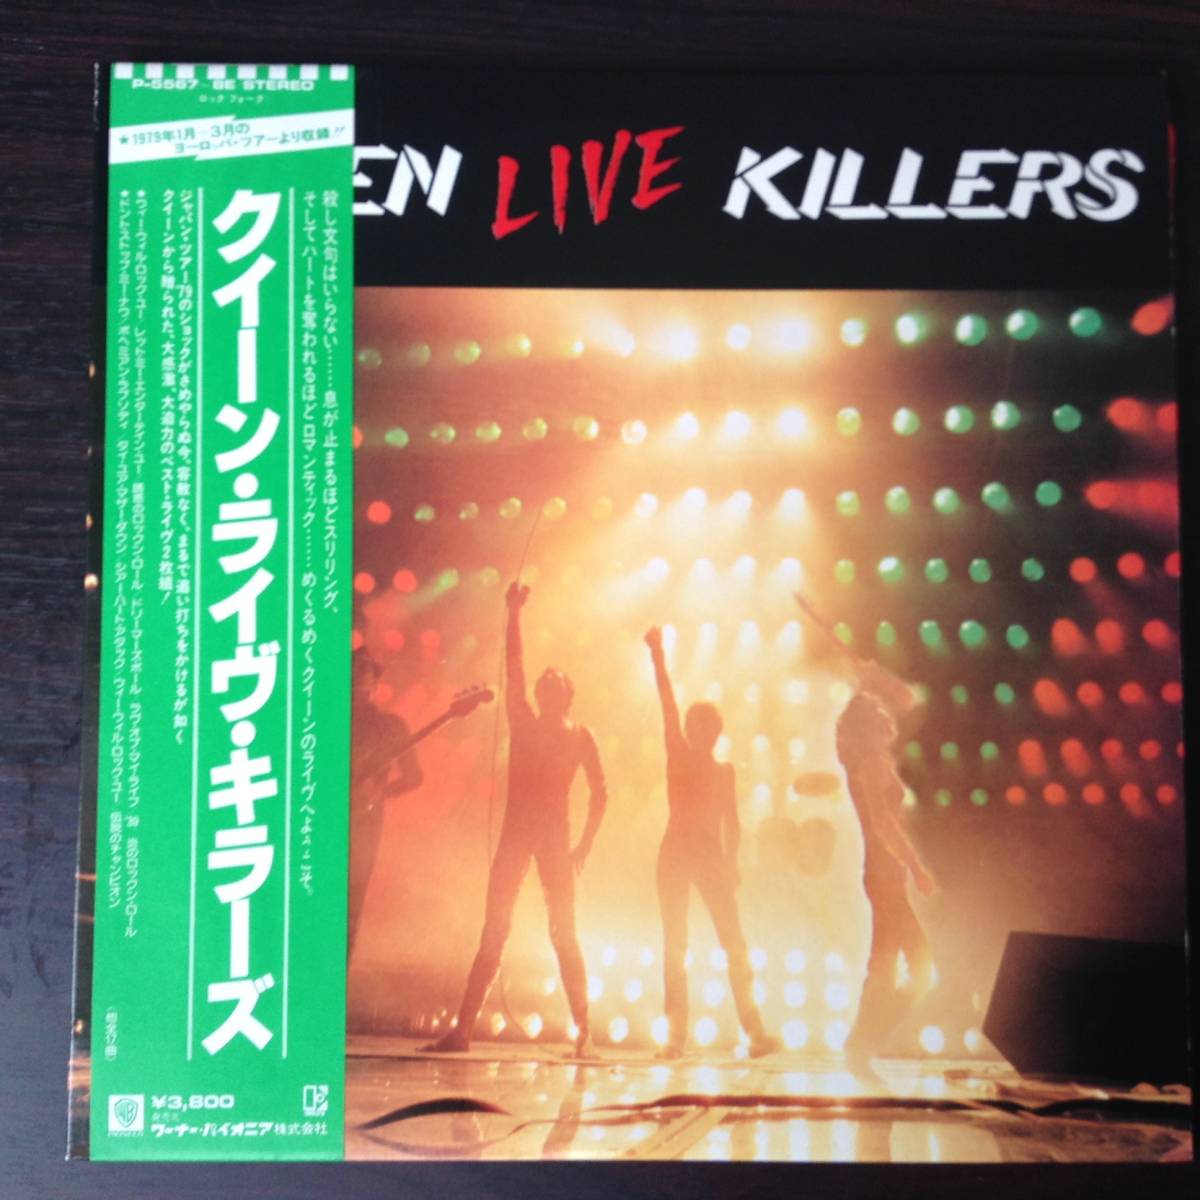 Queen – Live Killers アナログレコード LP - www.natuba.pb.gov.br